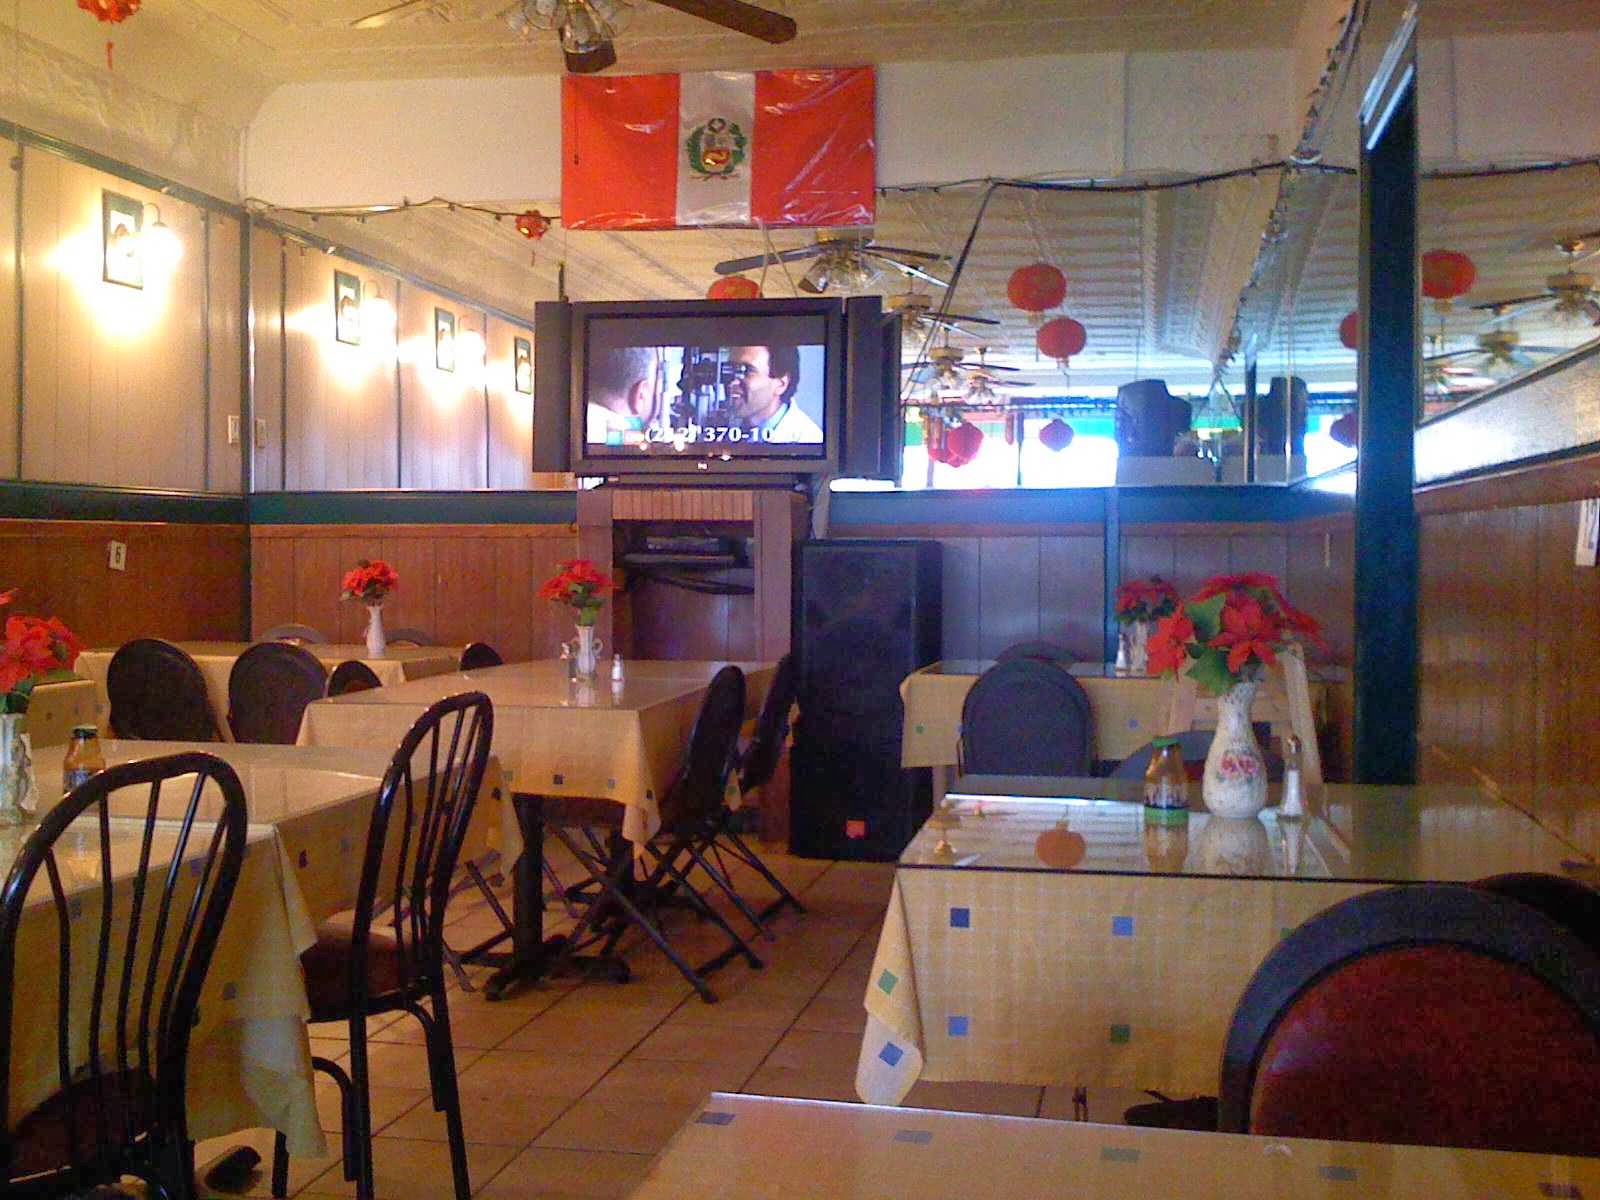 Photo of La Union in Corona City, New York, United States - 1 Picture of Restaurant, Food, Point of interest, Establishment